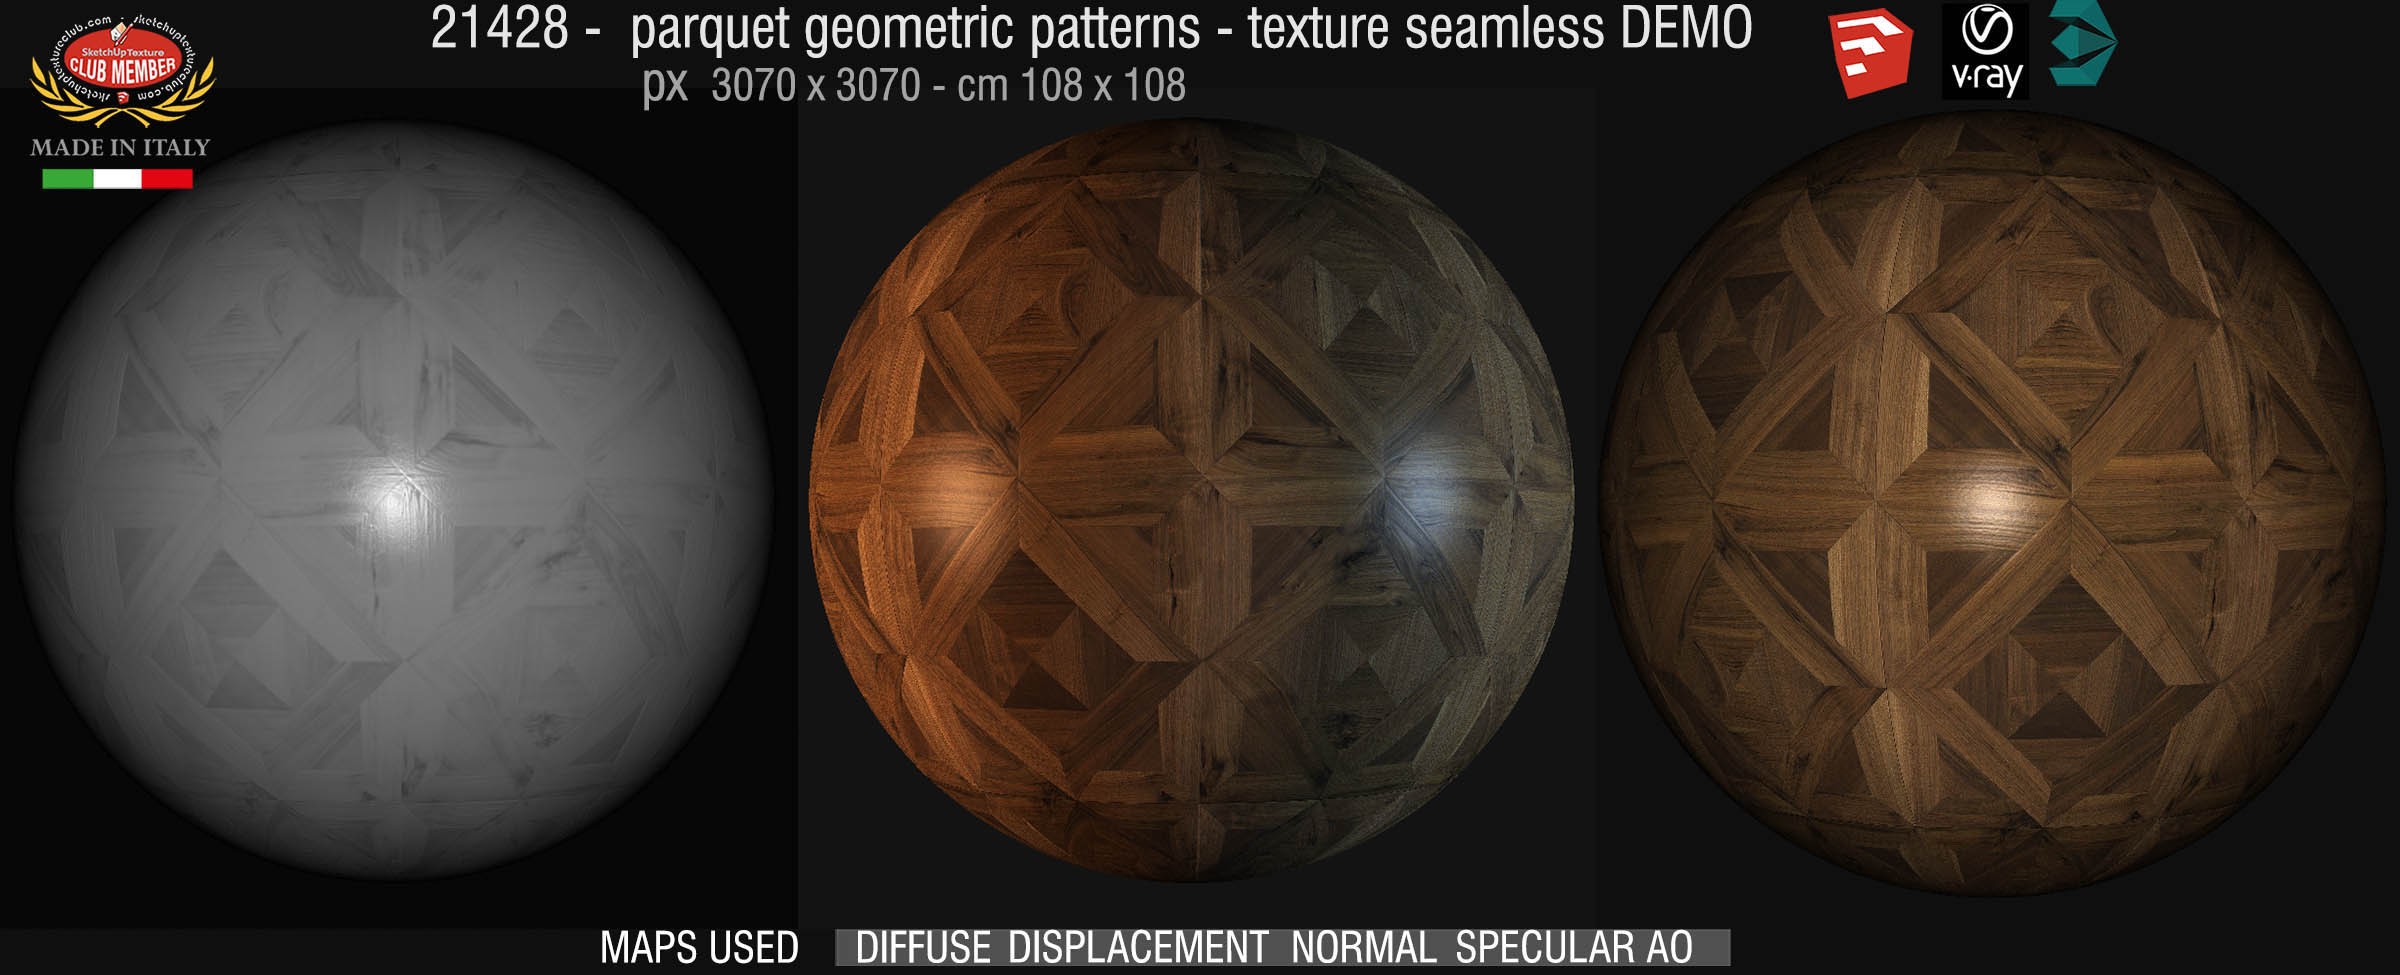 21428 parquet geometric patterns texture seamless + maps DEMO